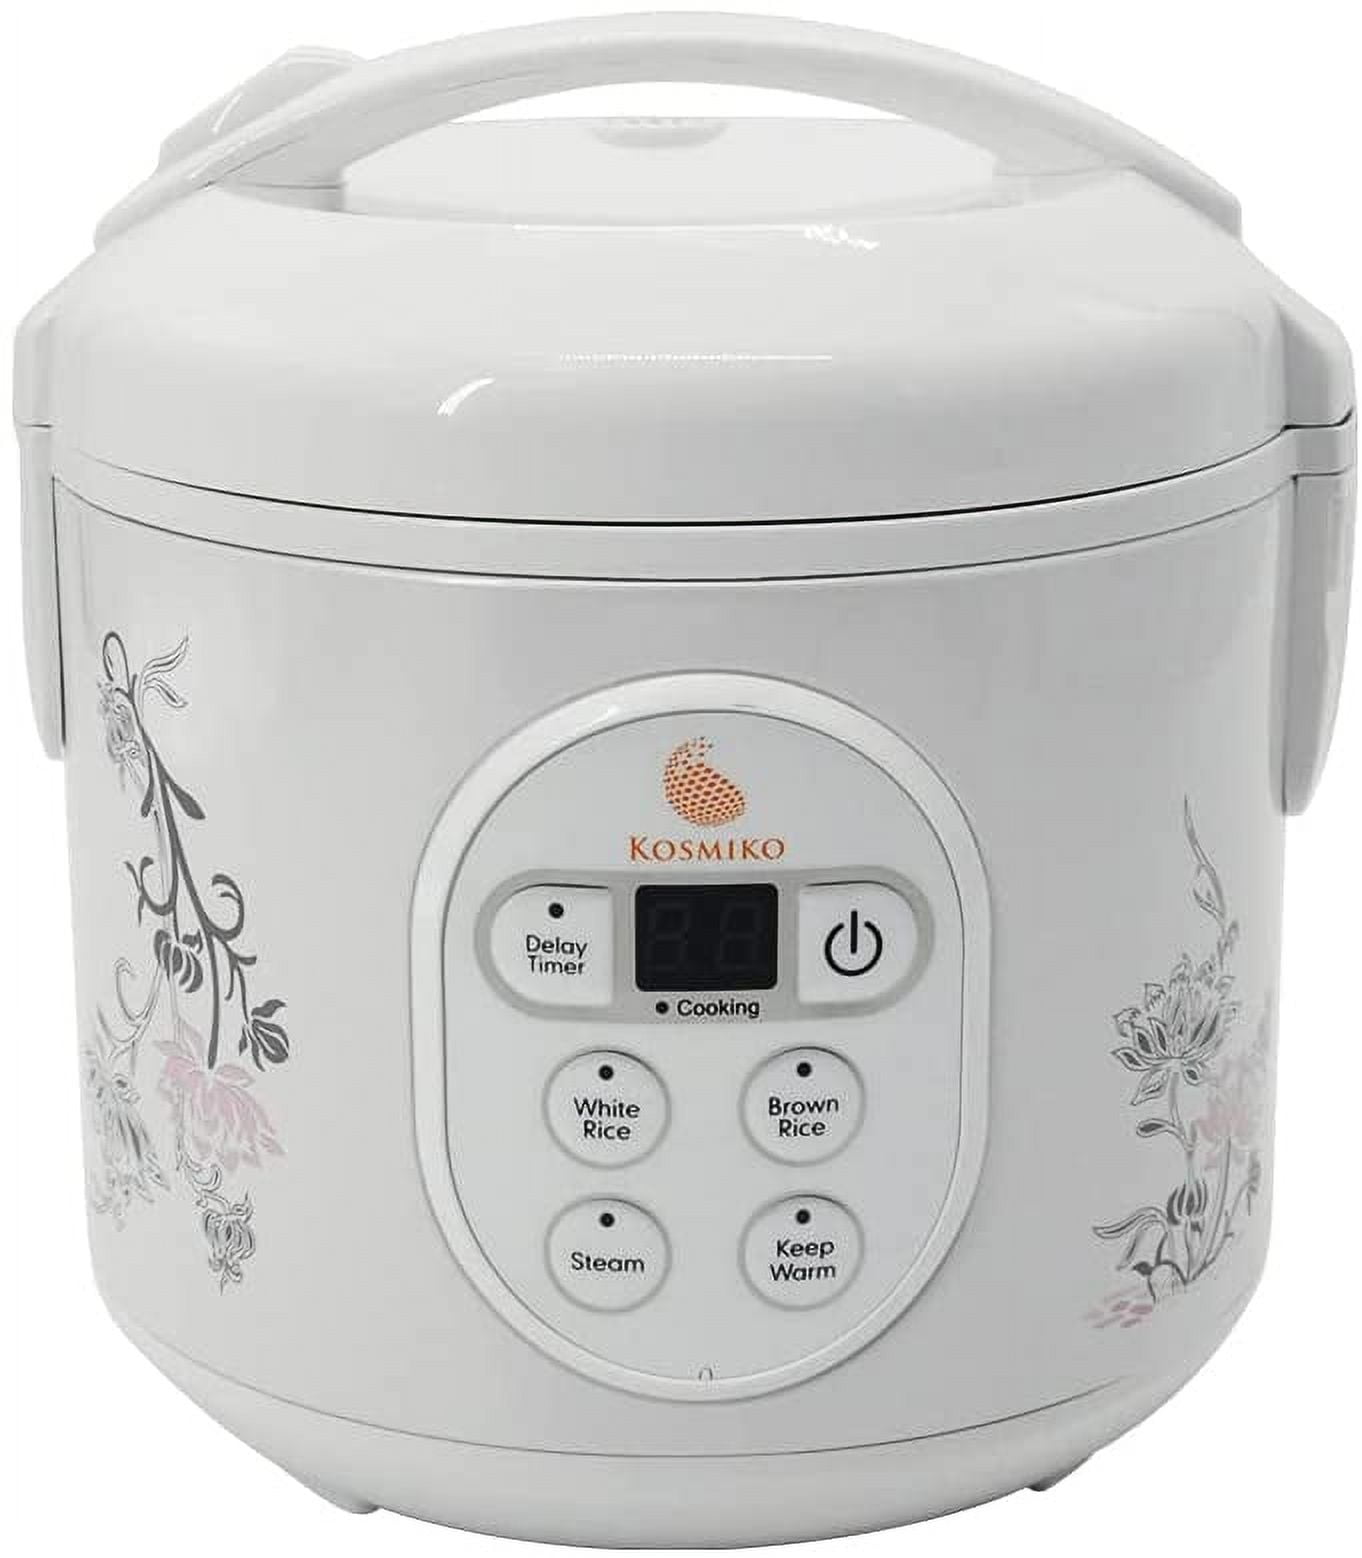 Aroma Professional Plus 4qt Rice Cooker - appliances - by owner - sale -  craigslist